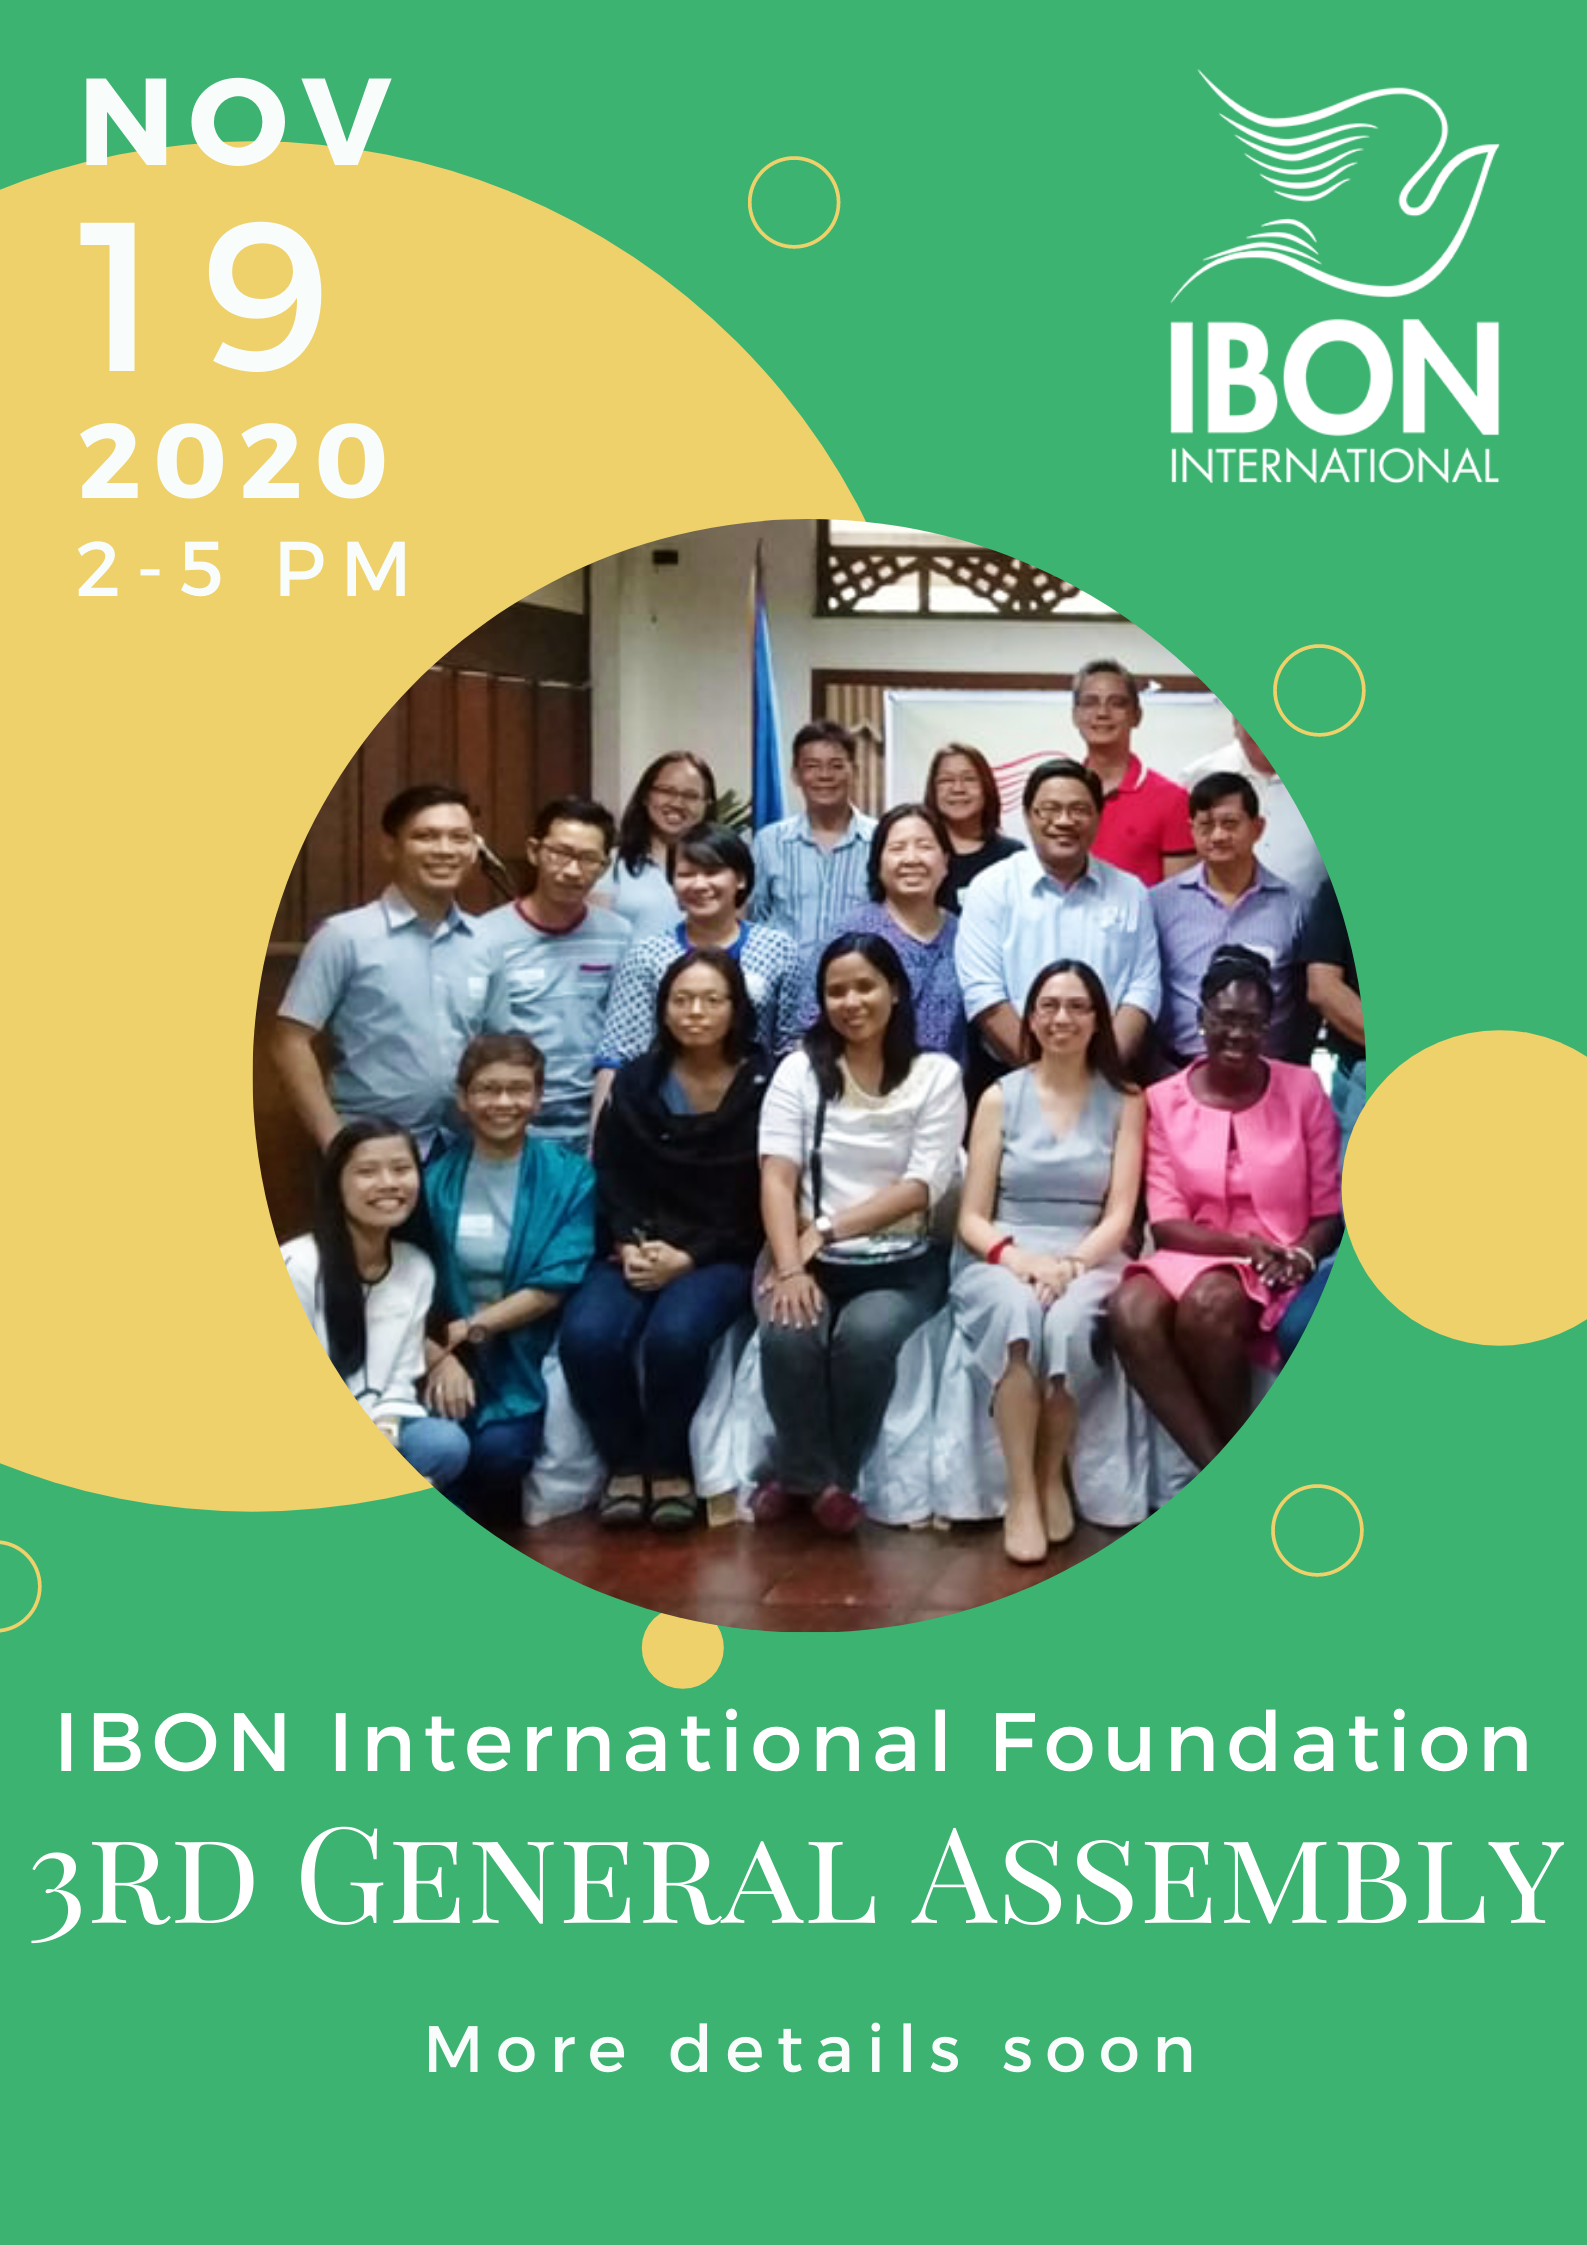 IBON International Foundation 3rd General Assembly (19 November)